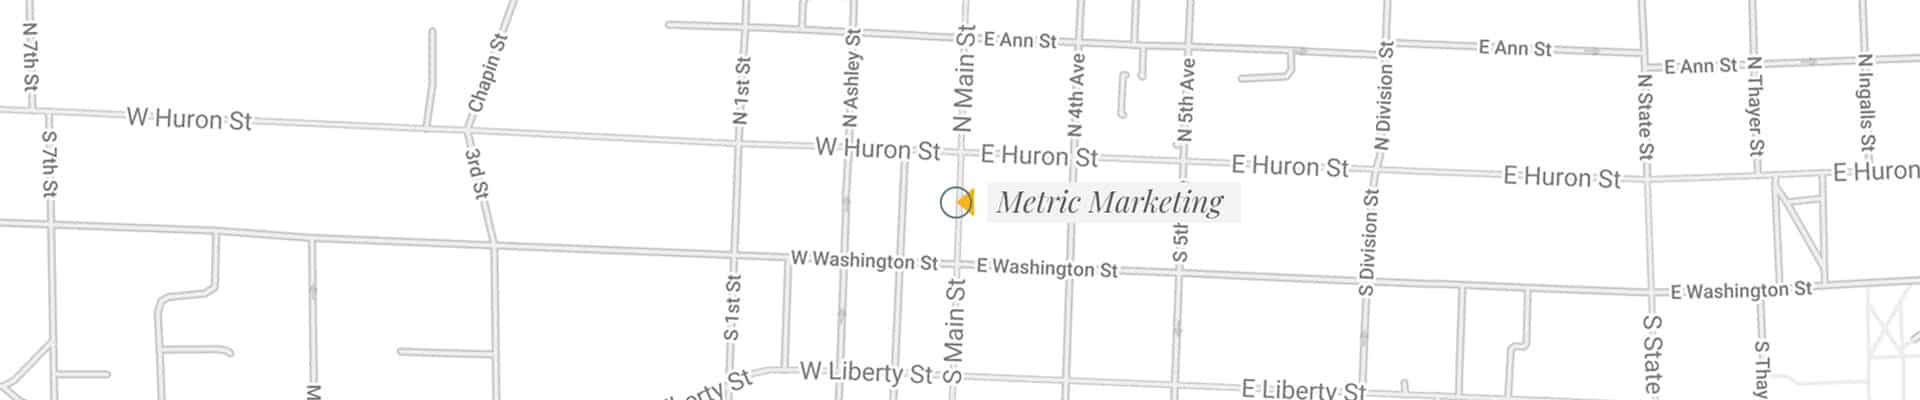 Map of Metric Marketing Location